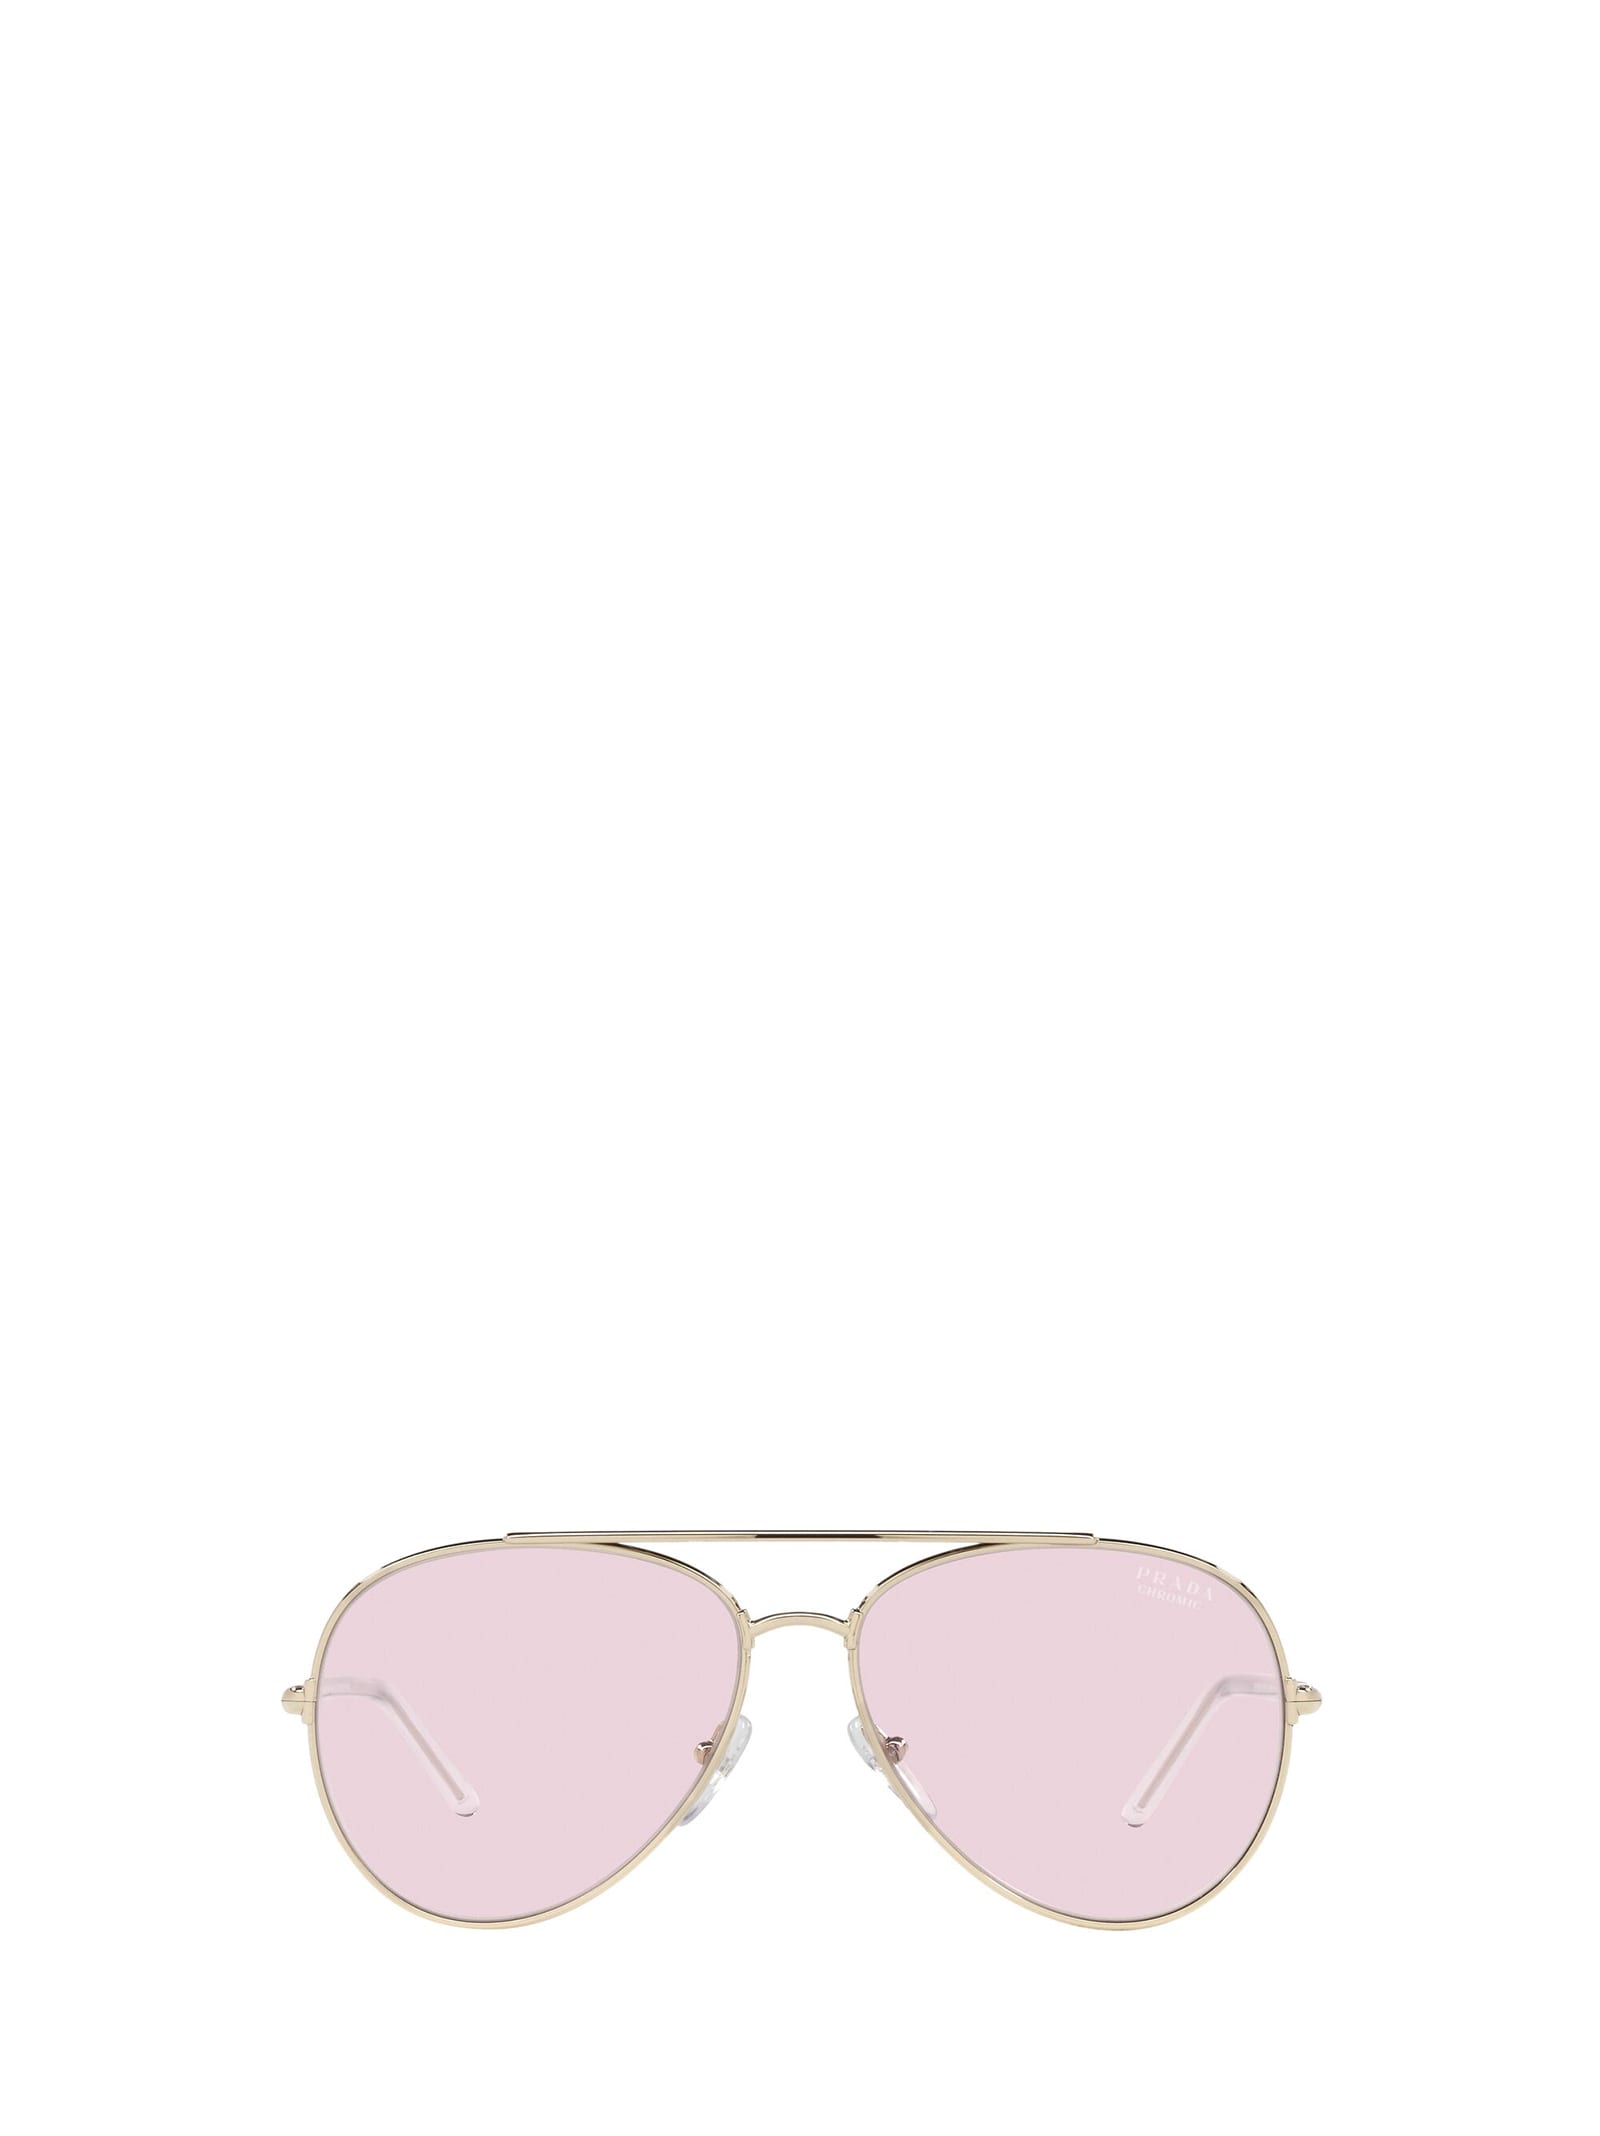 Prada Eyewear Prada Pr 66xs Pale Gold Sunglasses